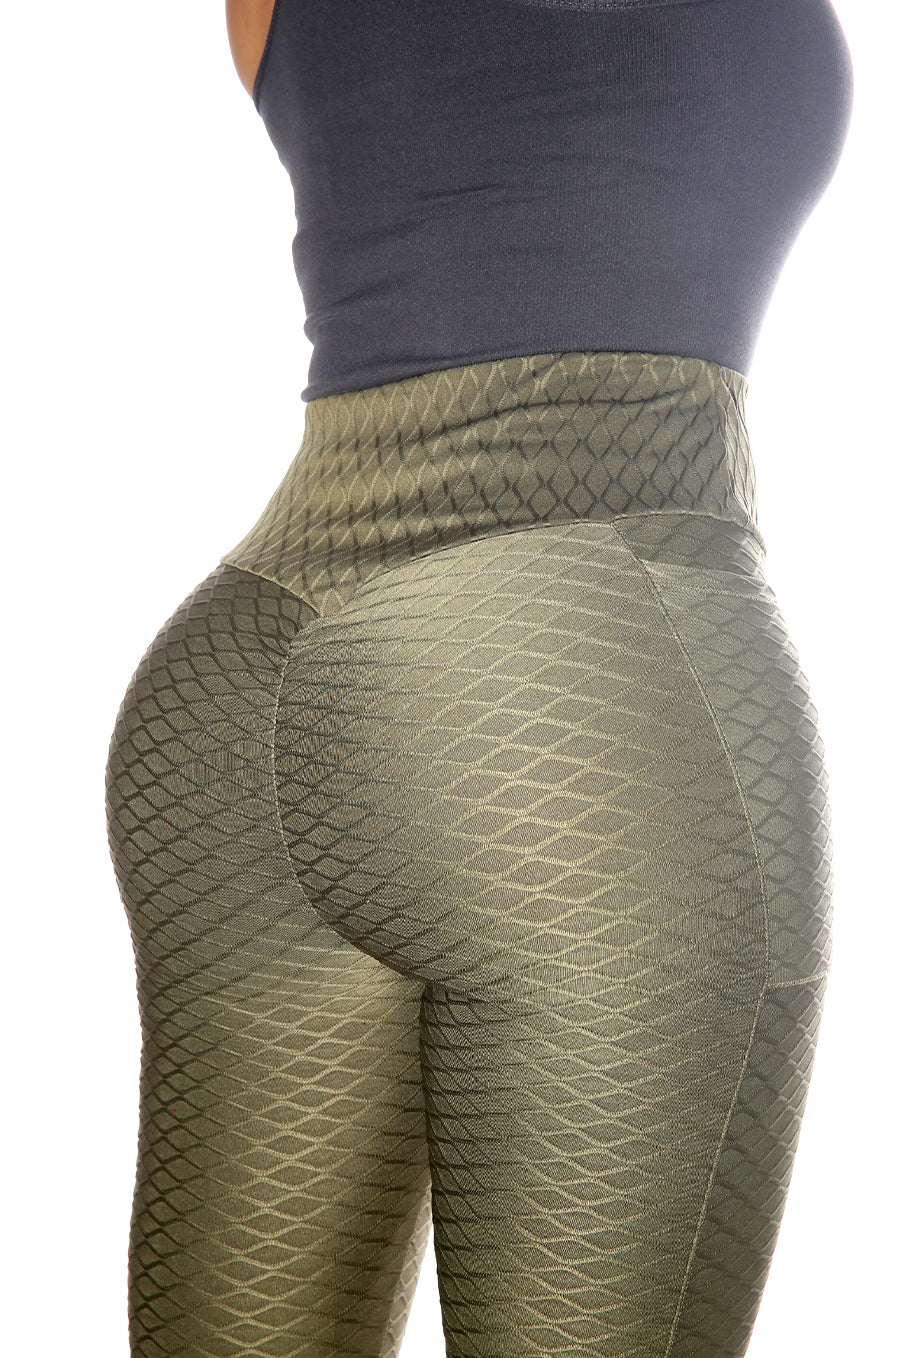 Wholesale Womens High Waist Diamond Honeycomb Textured Butt Scrunch Sports Leggings With Pockets - Olive - S&G Apparel